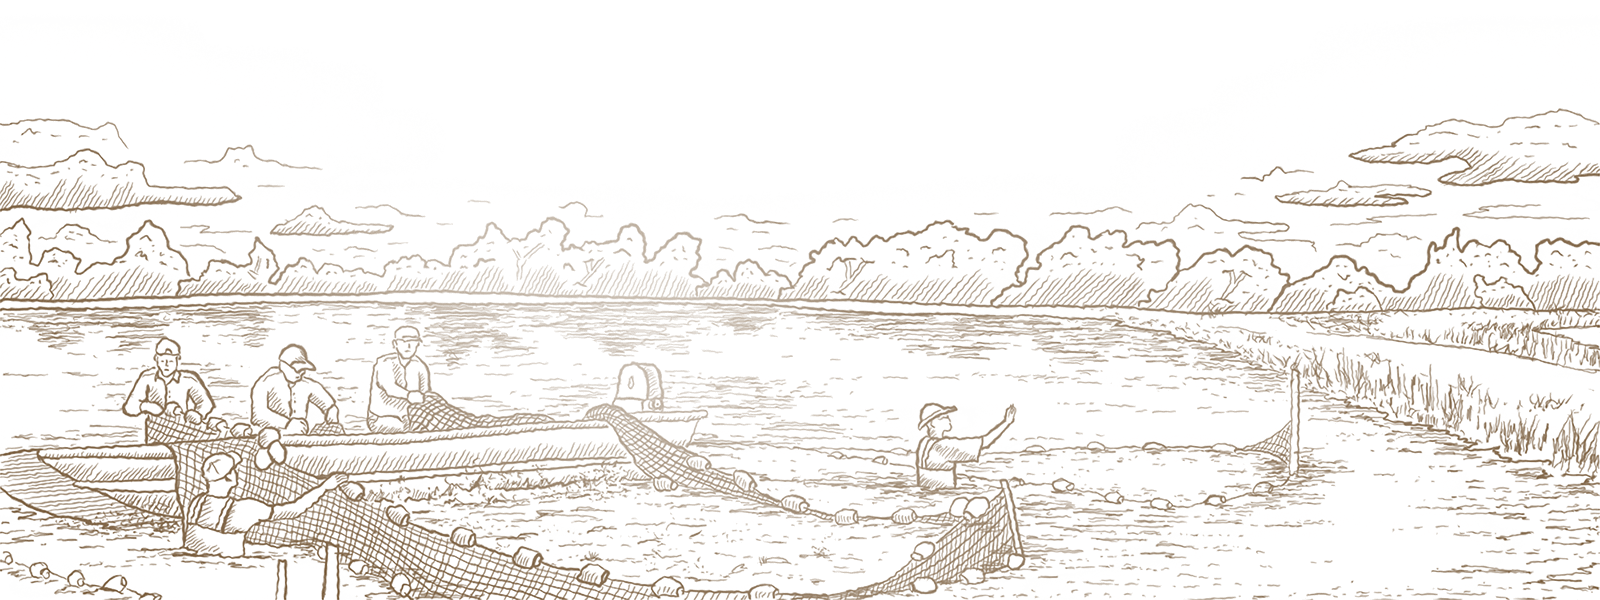 Illustration of Man Surveying Ponds